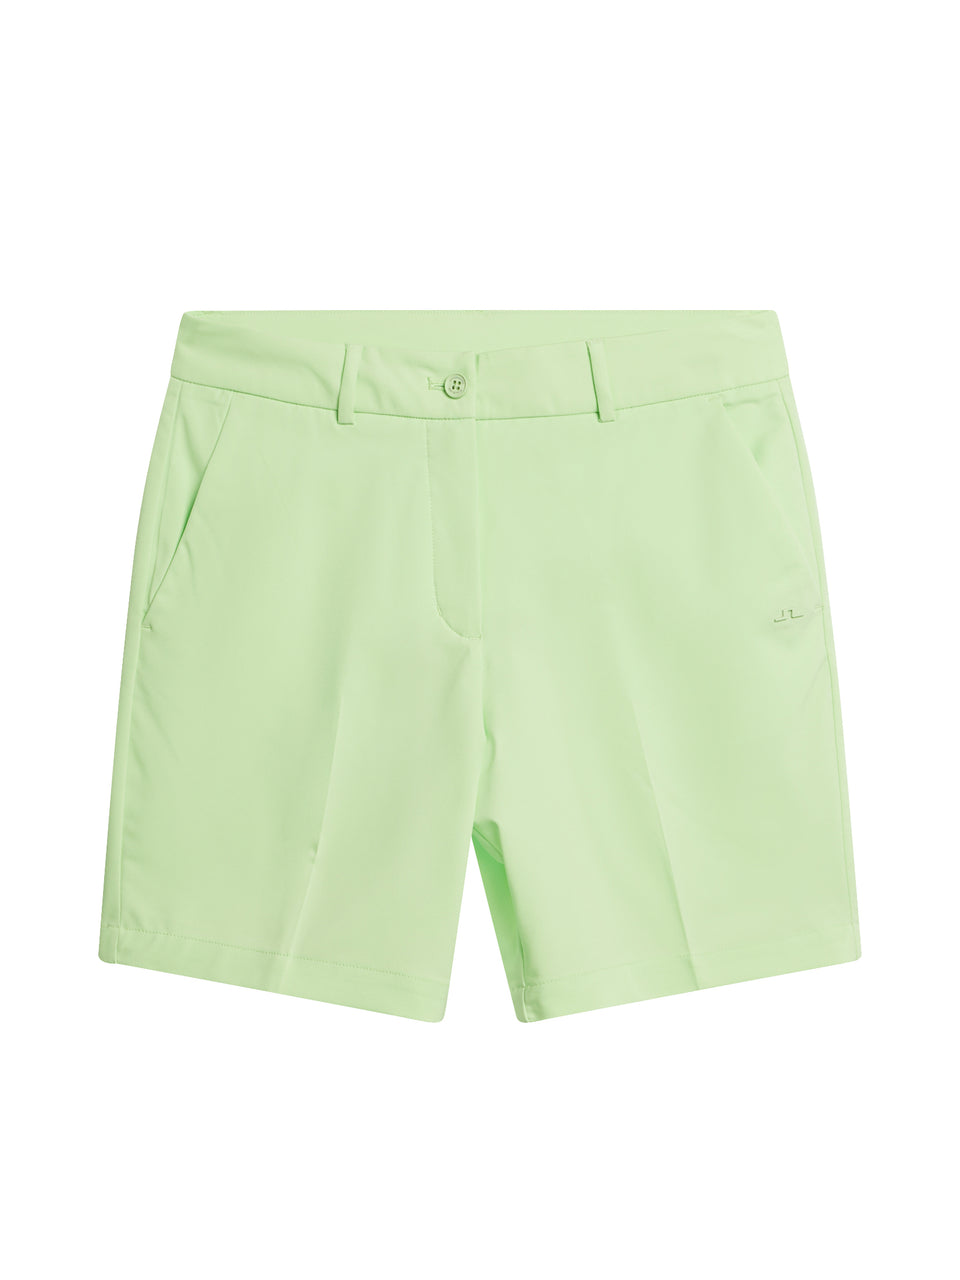 Gwen Long Shorts / Paradise Green